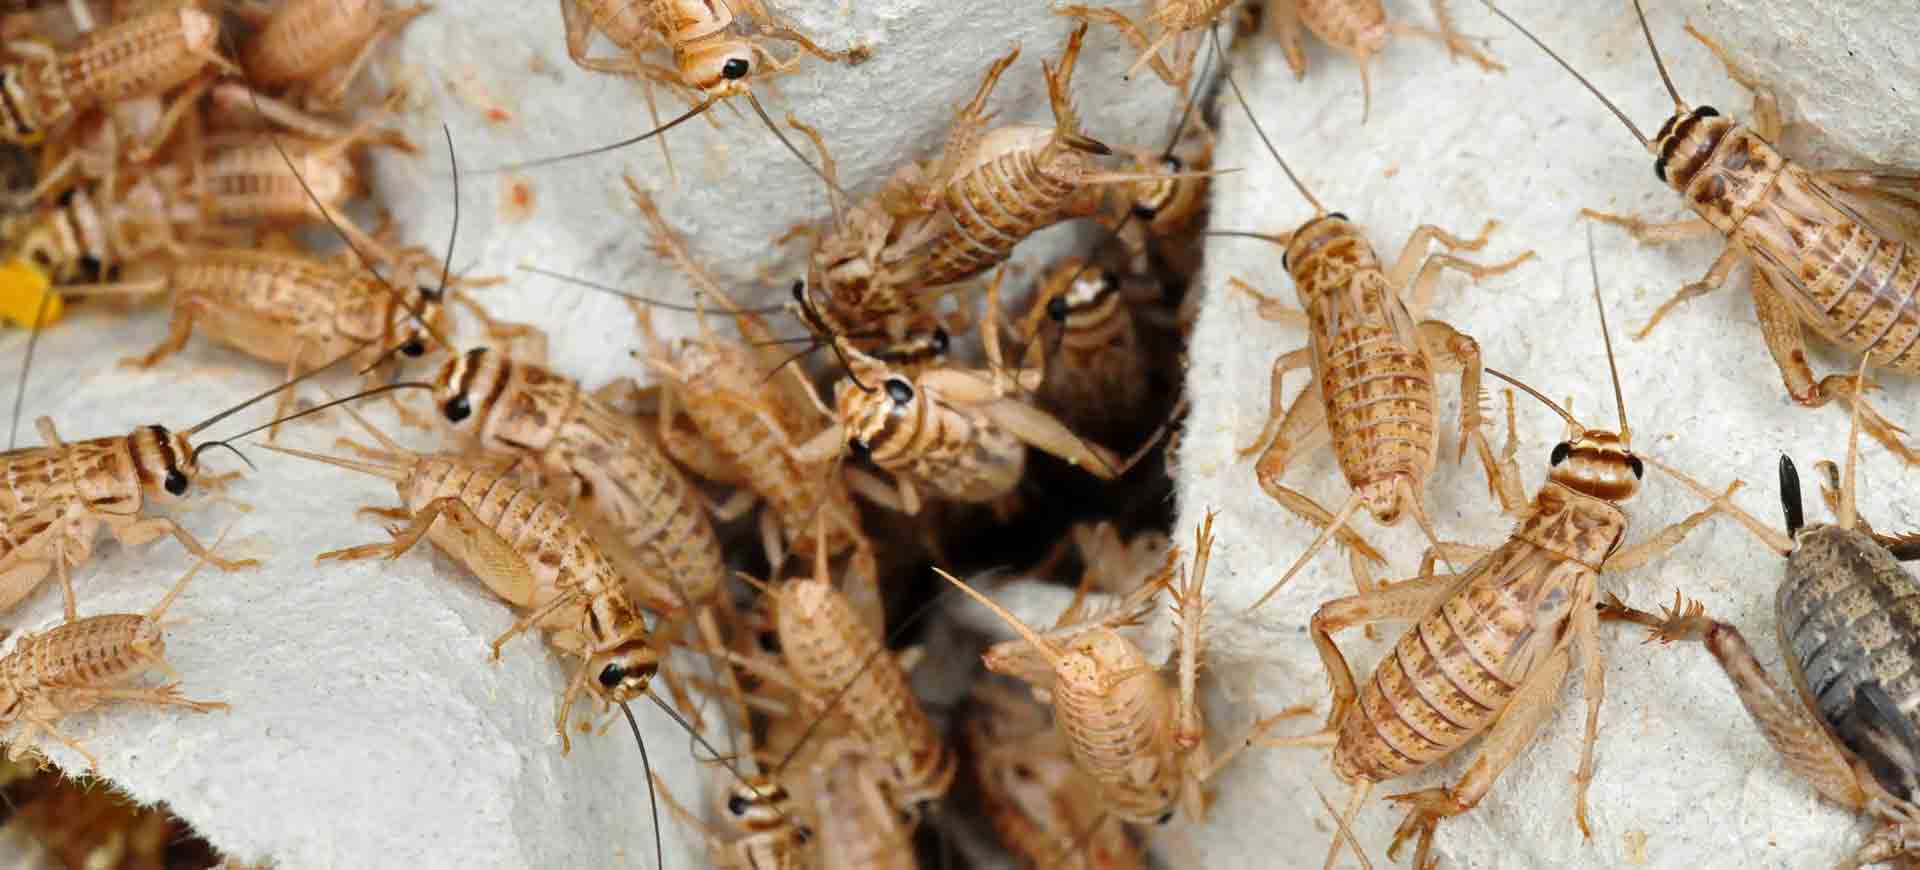 cricket pest control bay park